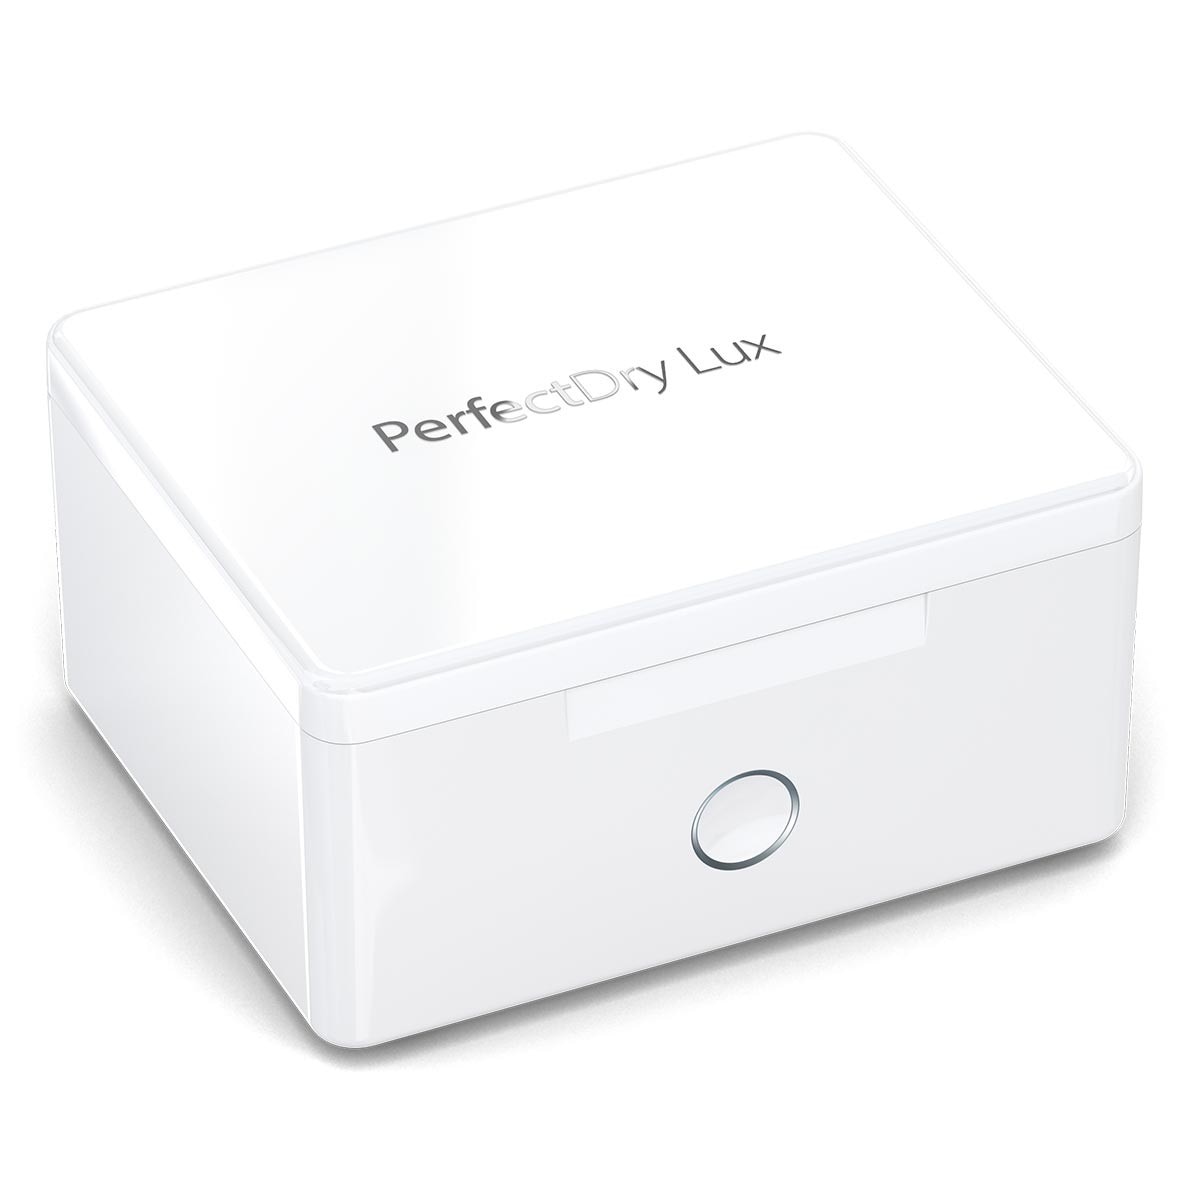 PefectDry Lux 助聽器除濕機